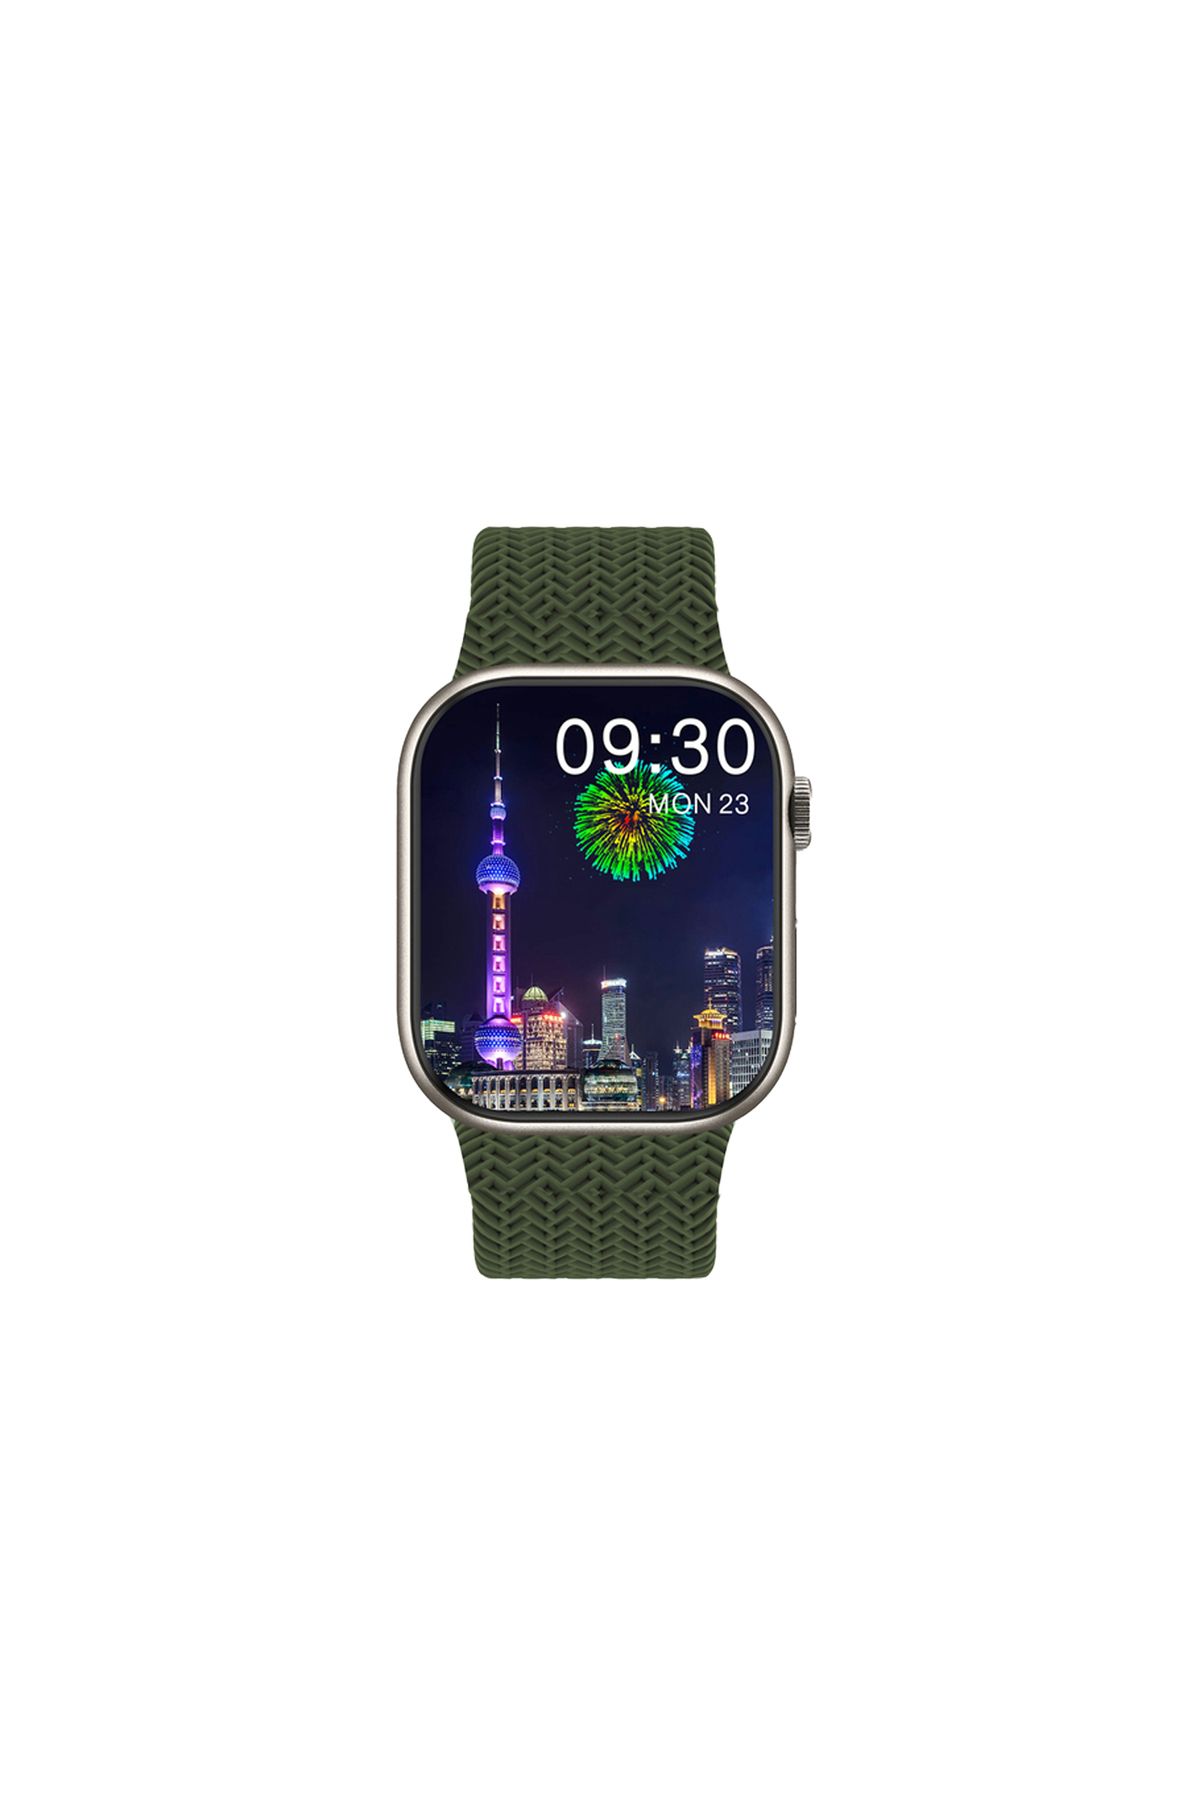 Global Watch HK9 Pro Plus Amoled Ekran Android İos HarmonyOs Uyumlu Akıllı Saat Yeşil WNE0919